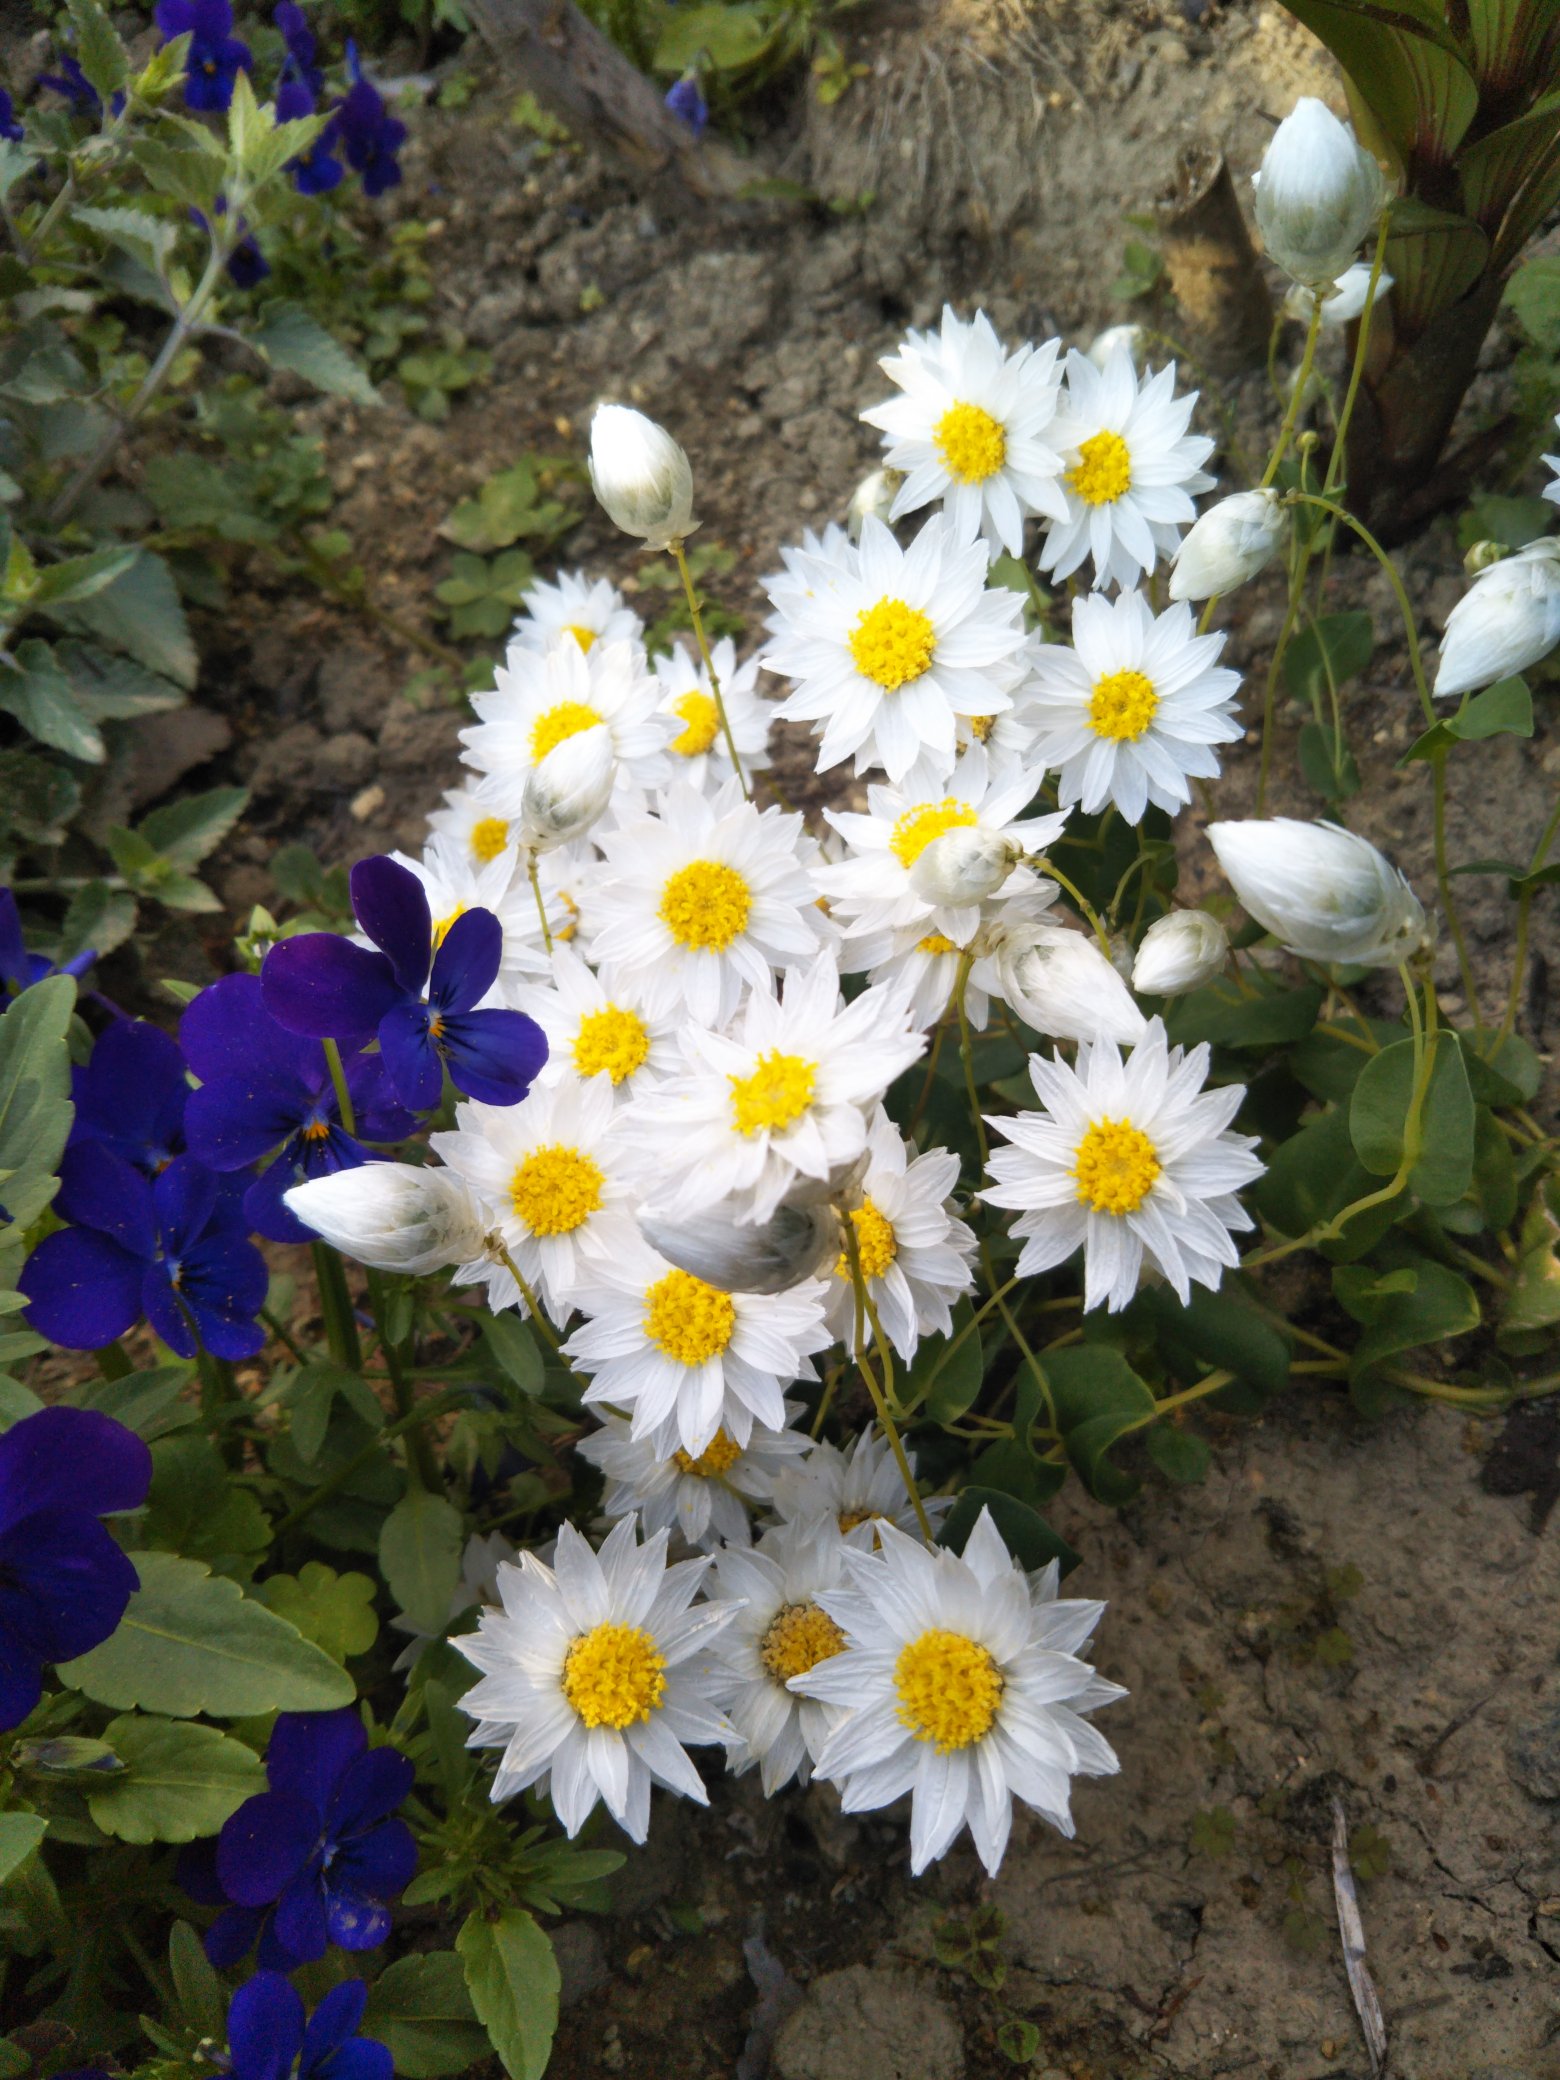 Twitter 上的 北角ヨウコ ガーデニング 庭の花 タキイ種苗 ローダンセ マクラタ ホワイト 咲きました カサカサしたドライフラワー 向きの花です O T Co Wgcf5gioun Twitter